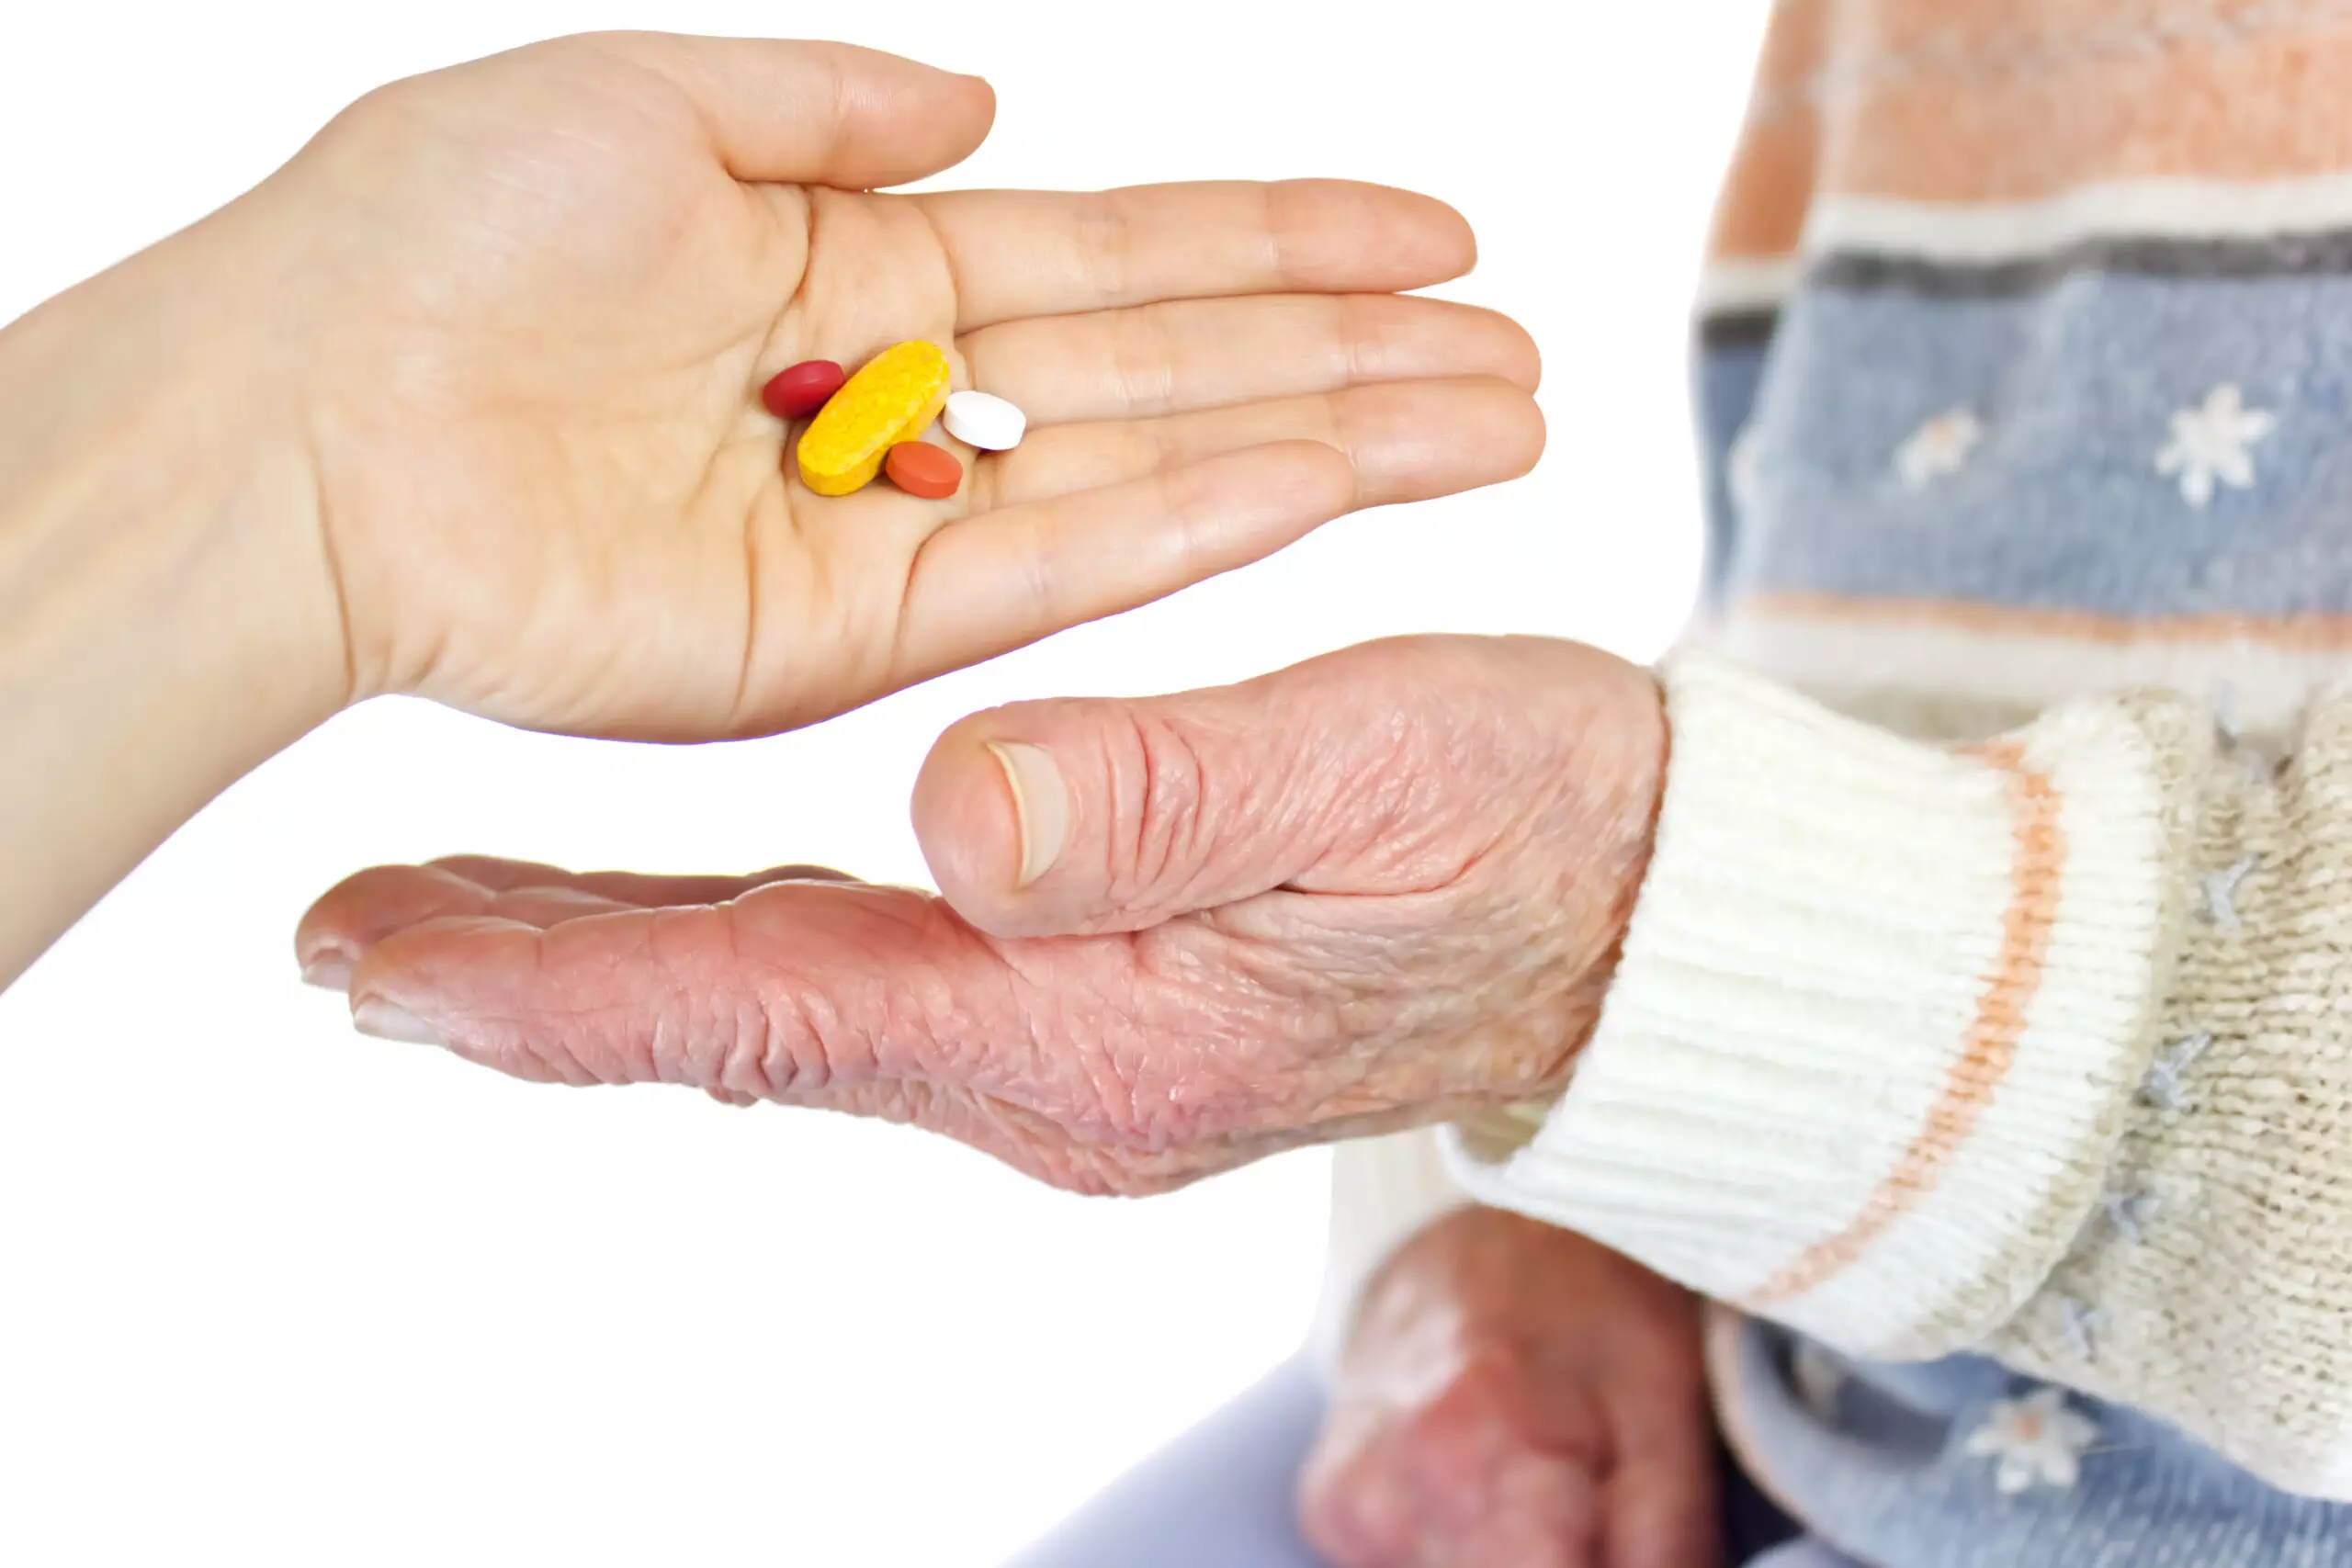 Assisting elderly with medication management.